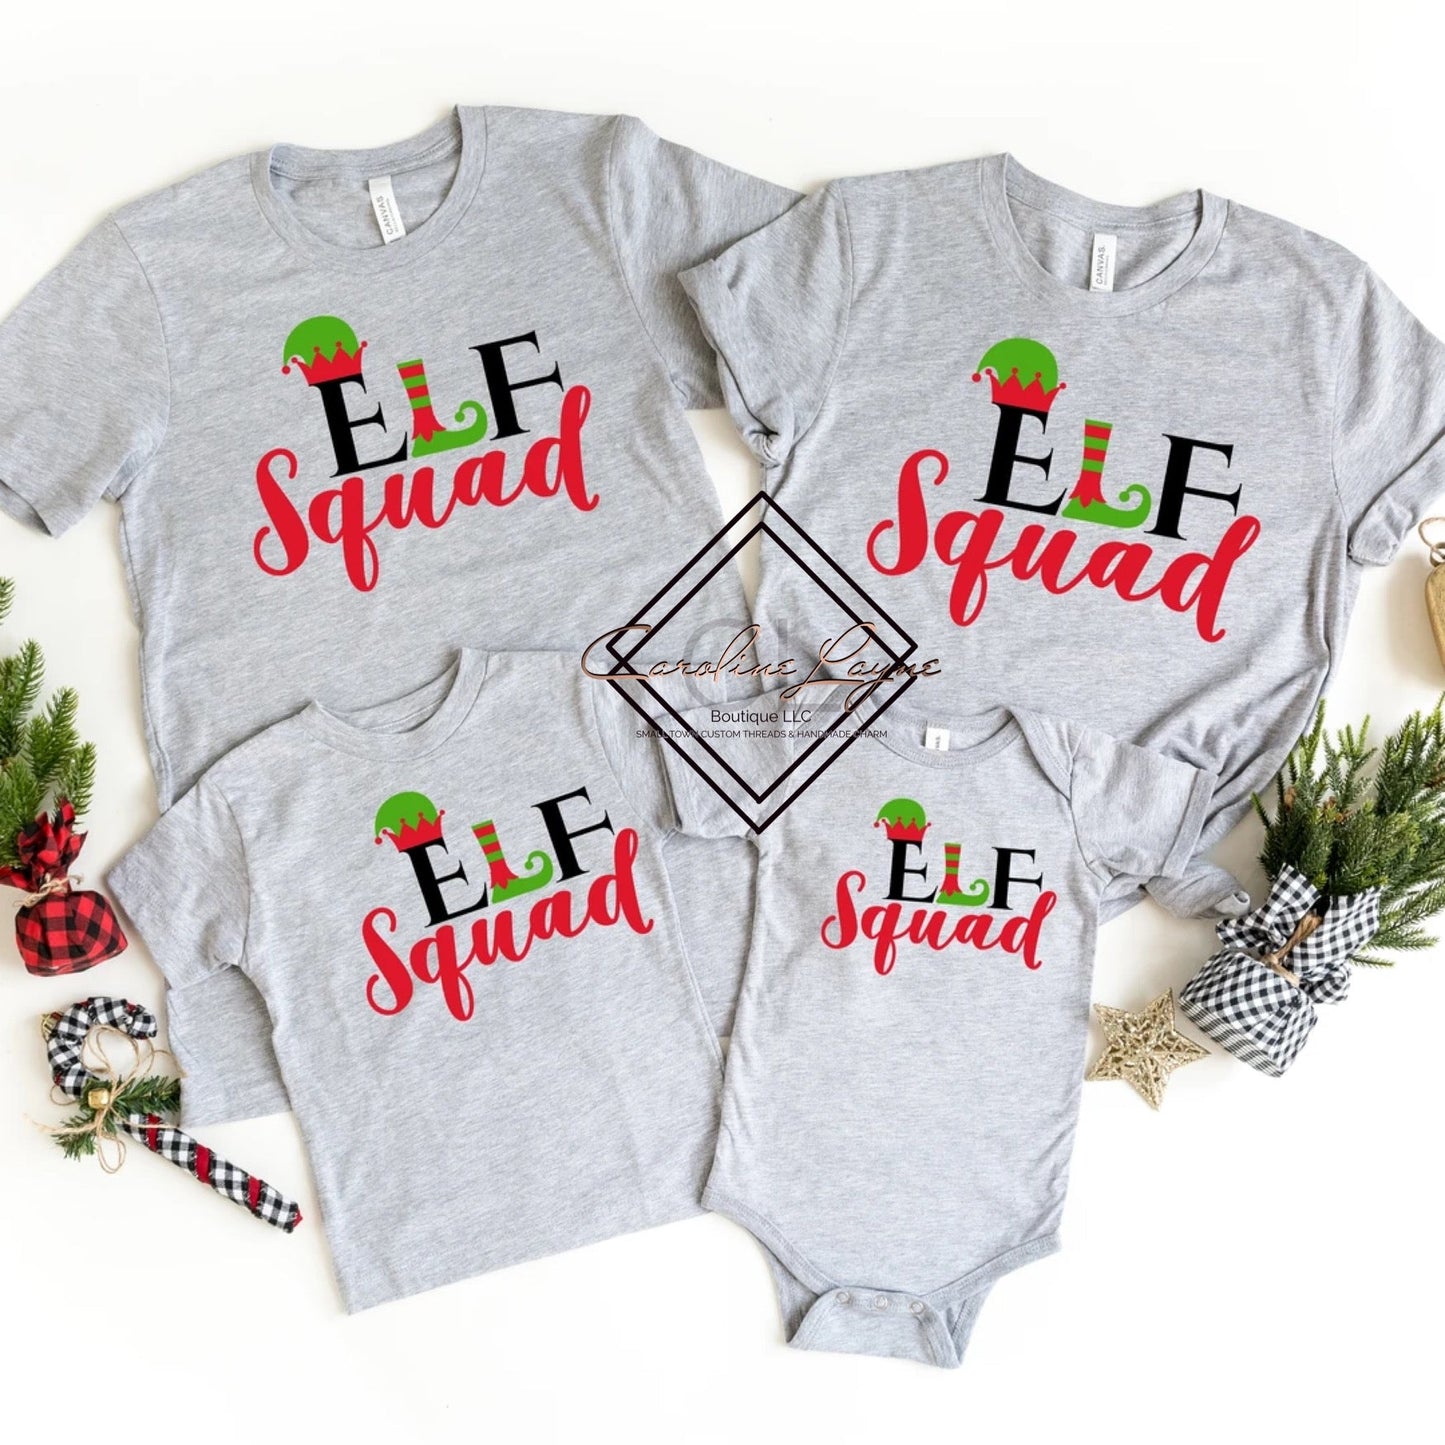 Elf Squad Family Set - Caroline Layne Boutique LLC